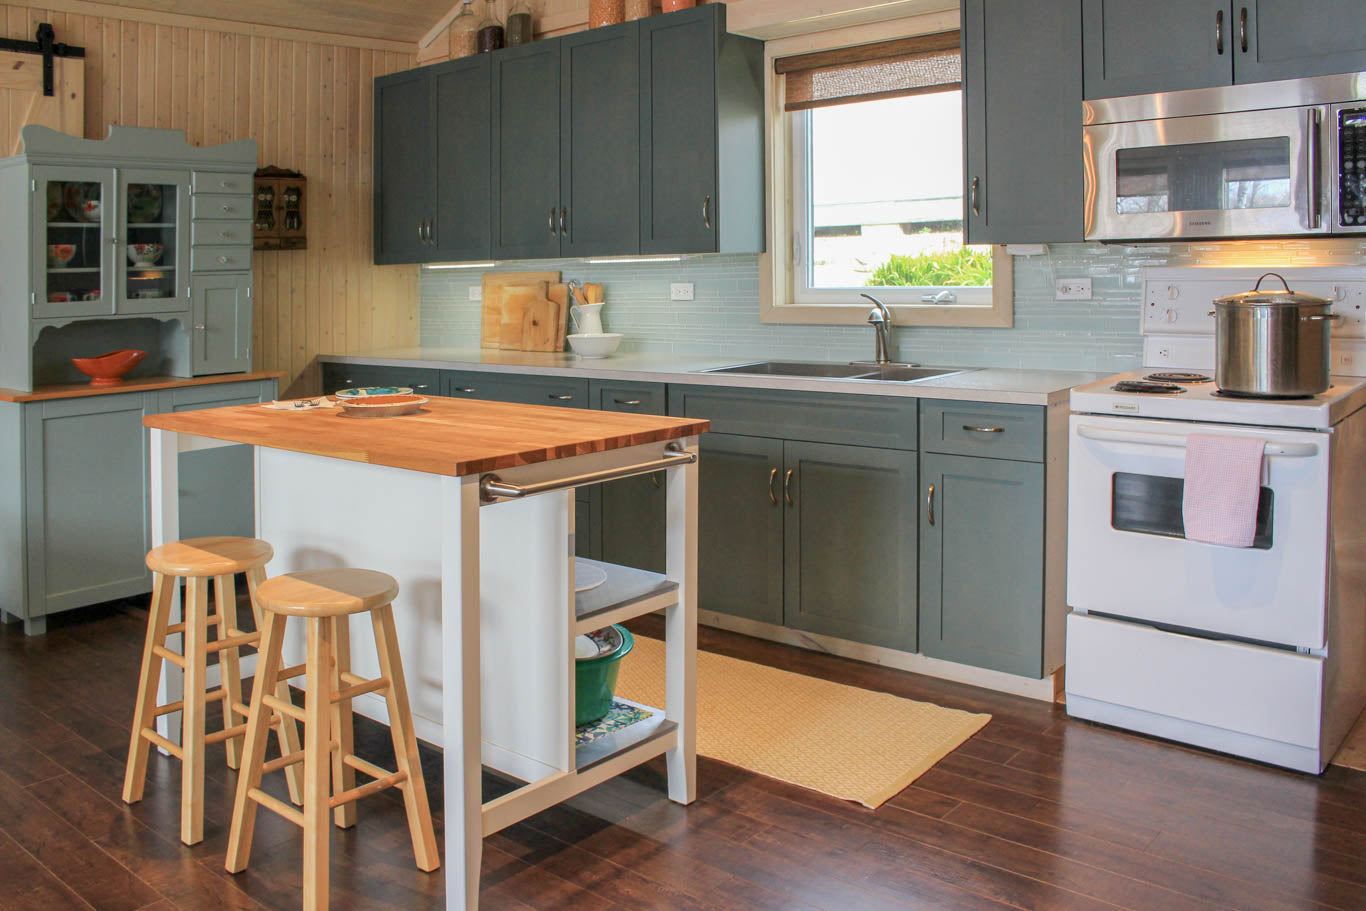 Rustic Cabin Kitchen Design